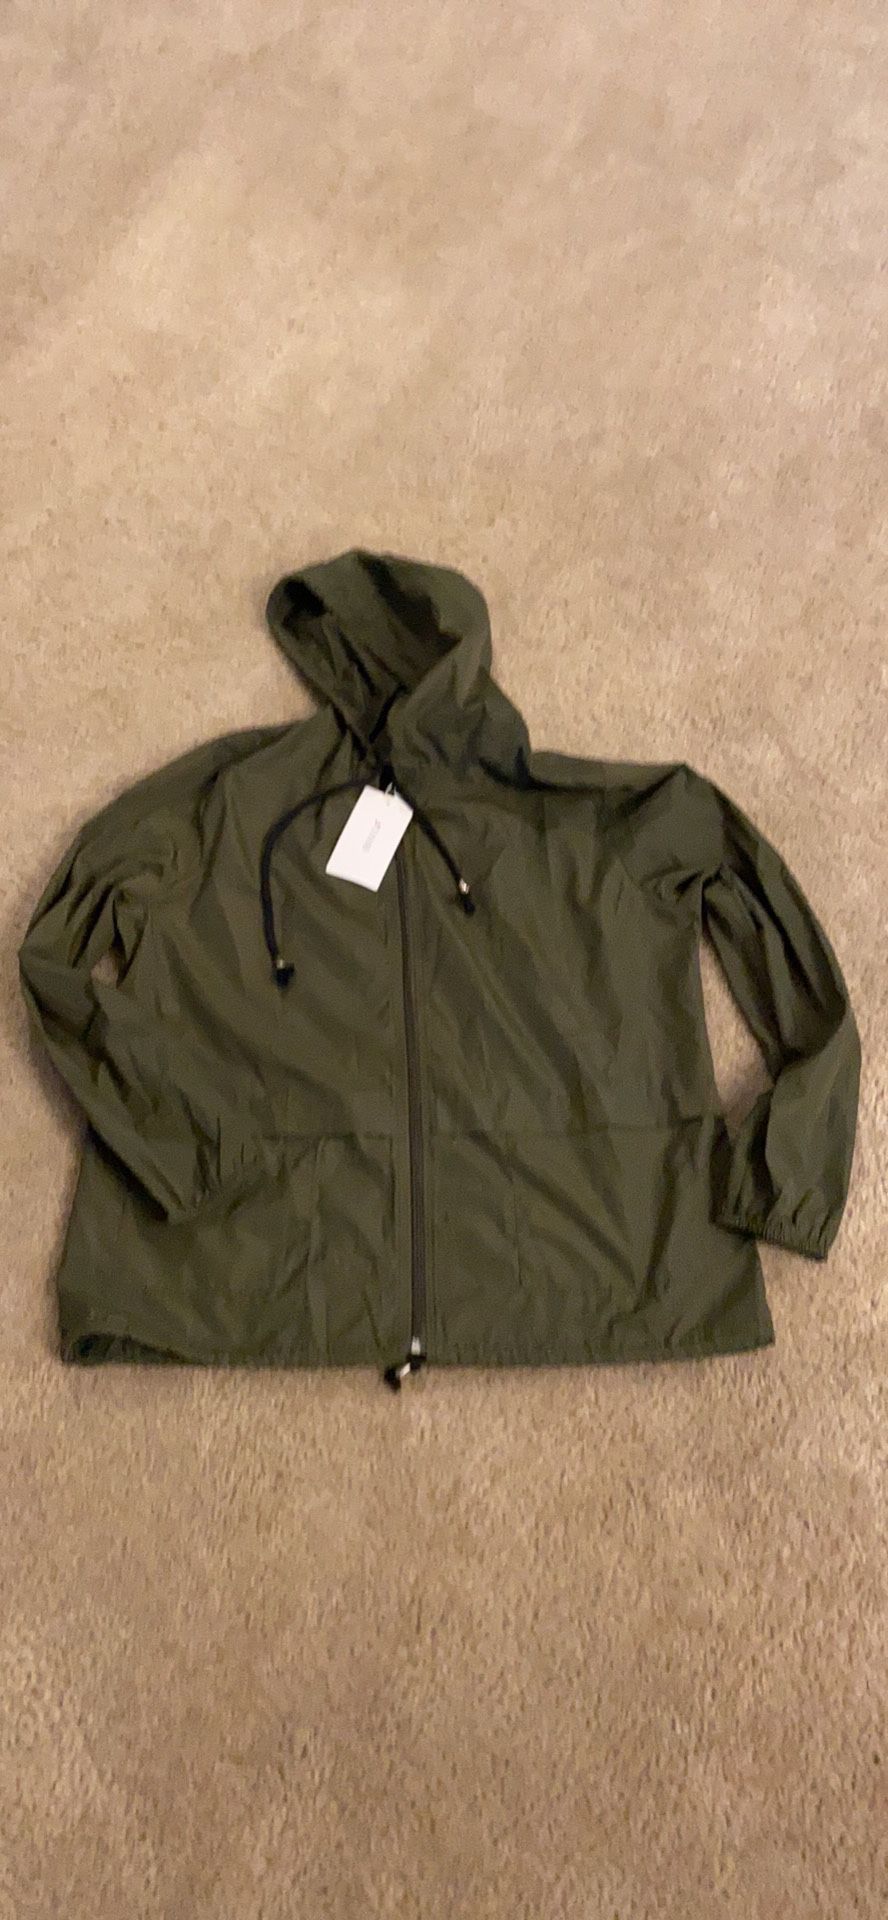 Army green medium rain jacket hoodie thin top